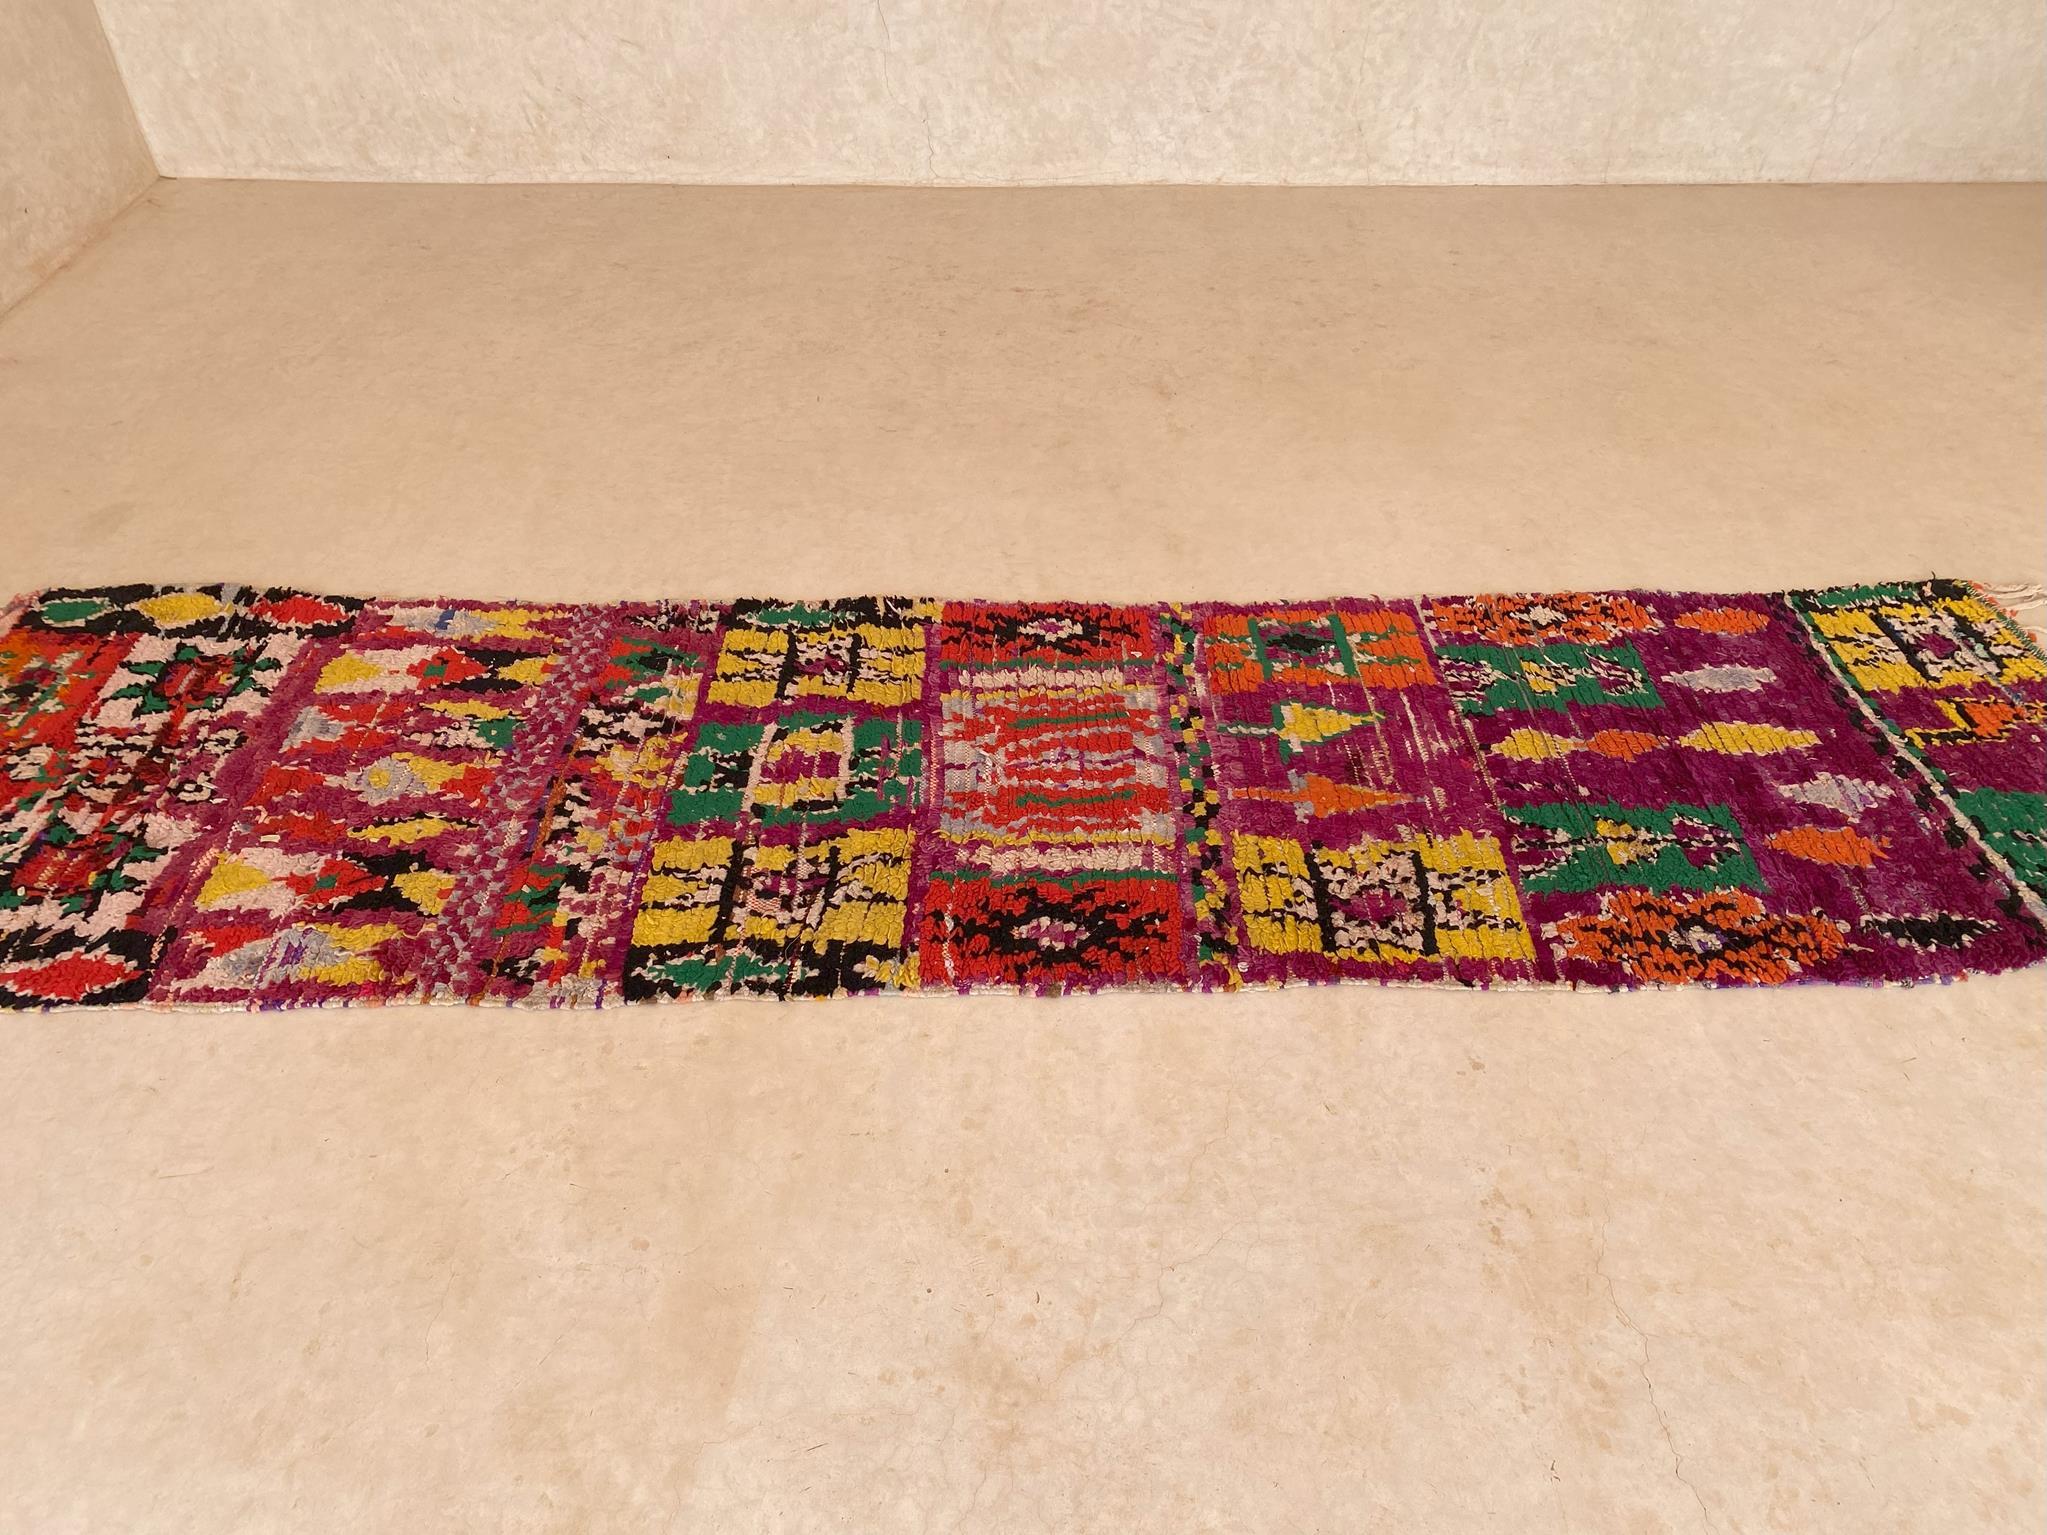 Hand-Woven Vintage Moroccan runner rug - Purple/green/orange - 2.8x11.5feet / 87x352cm For Sale